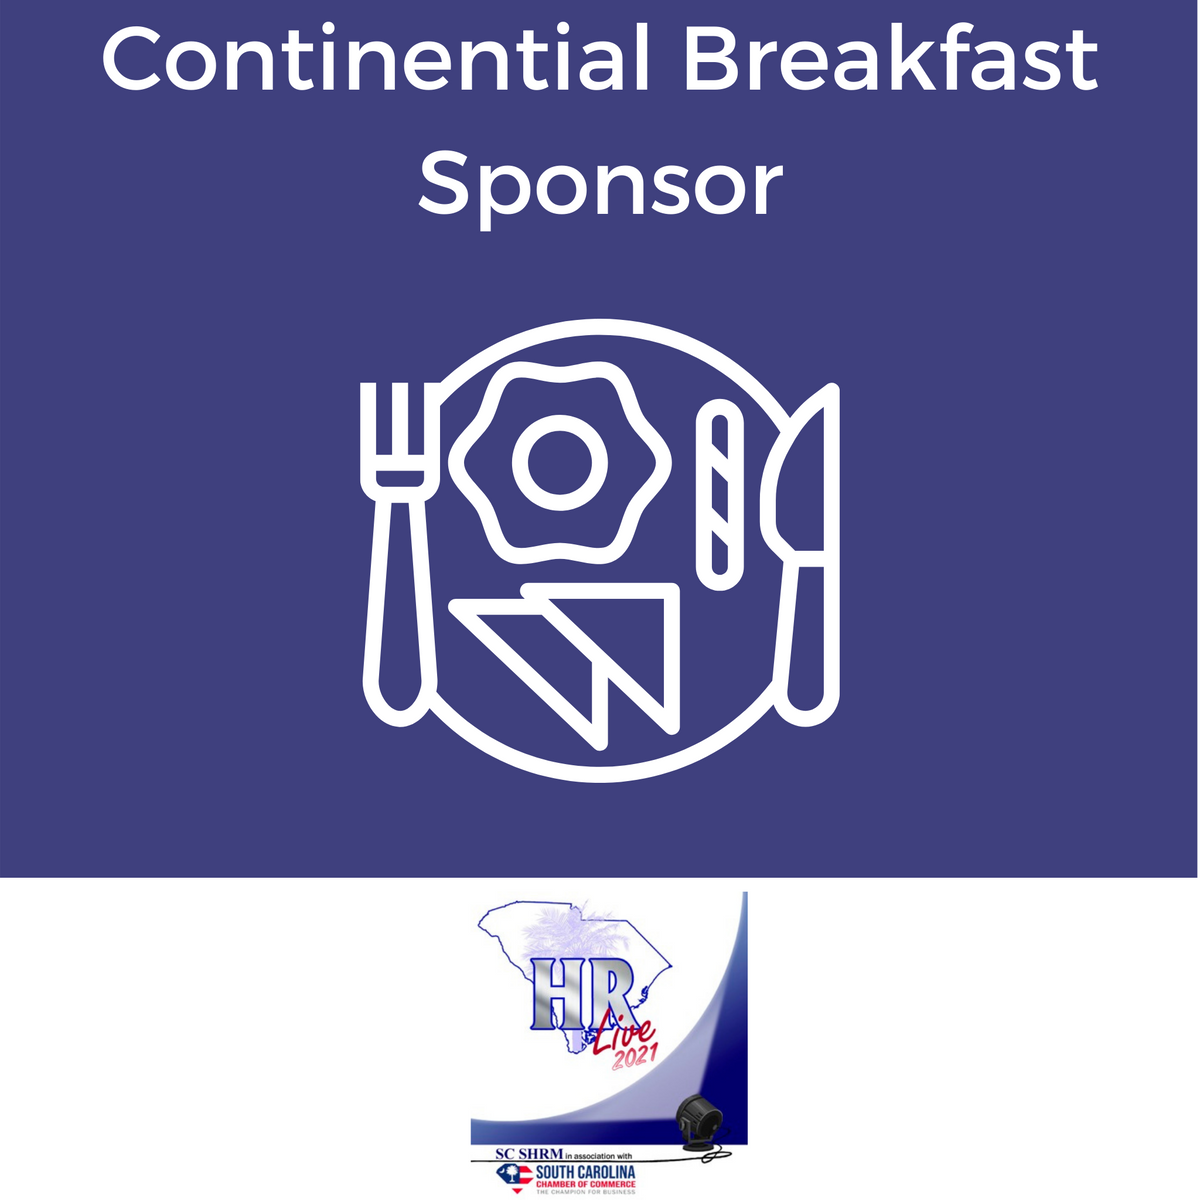 Continental Breakfast Sponsor